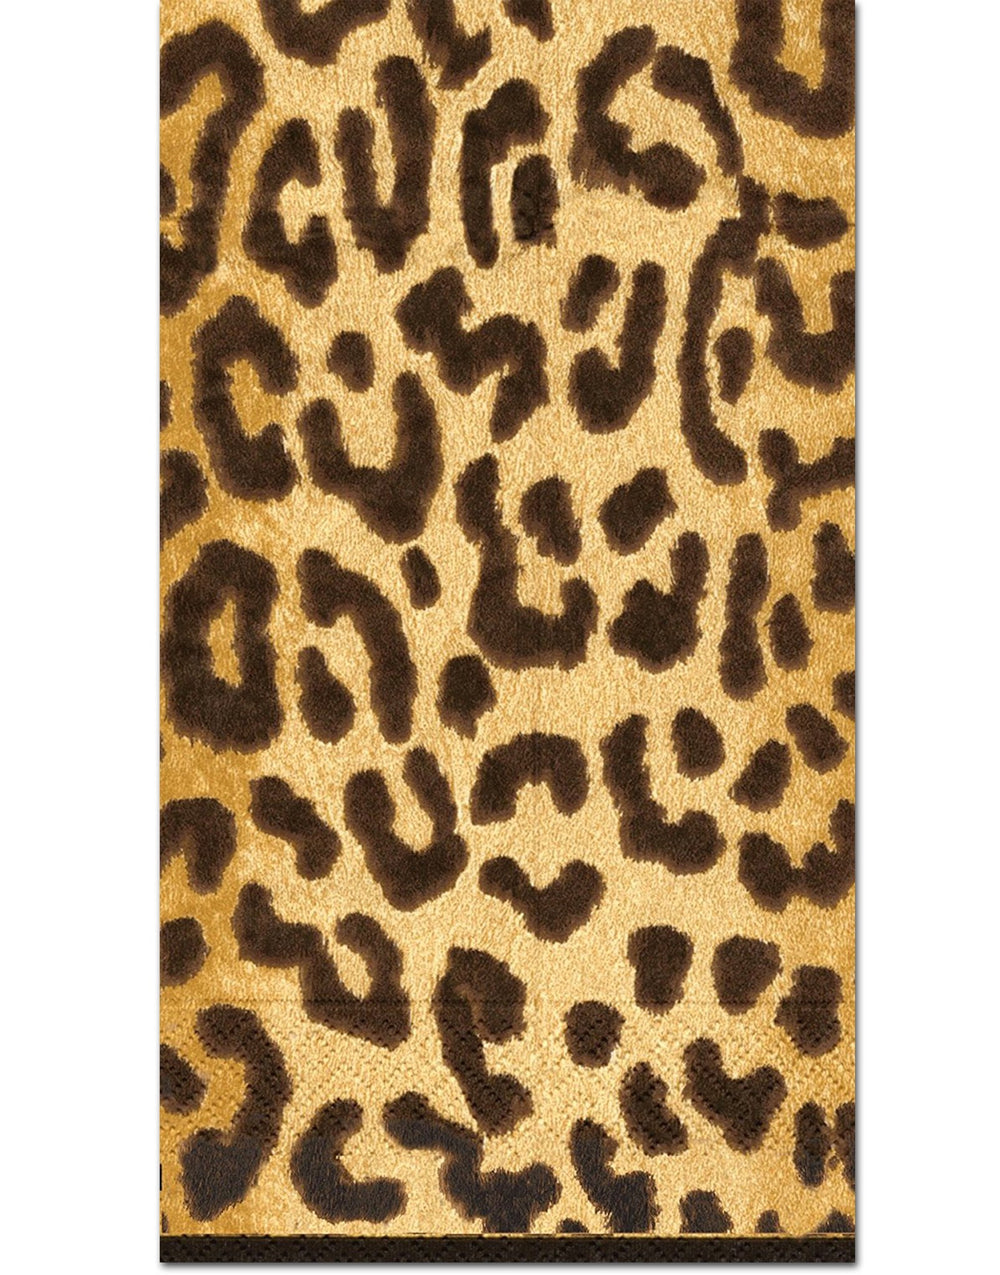 Zanzibar Leopard Guest Towels